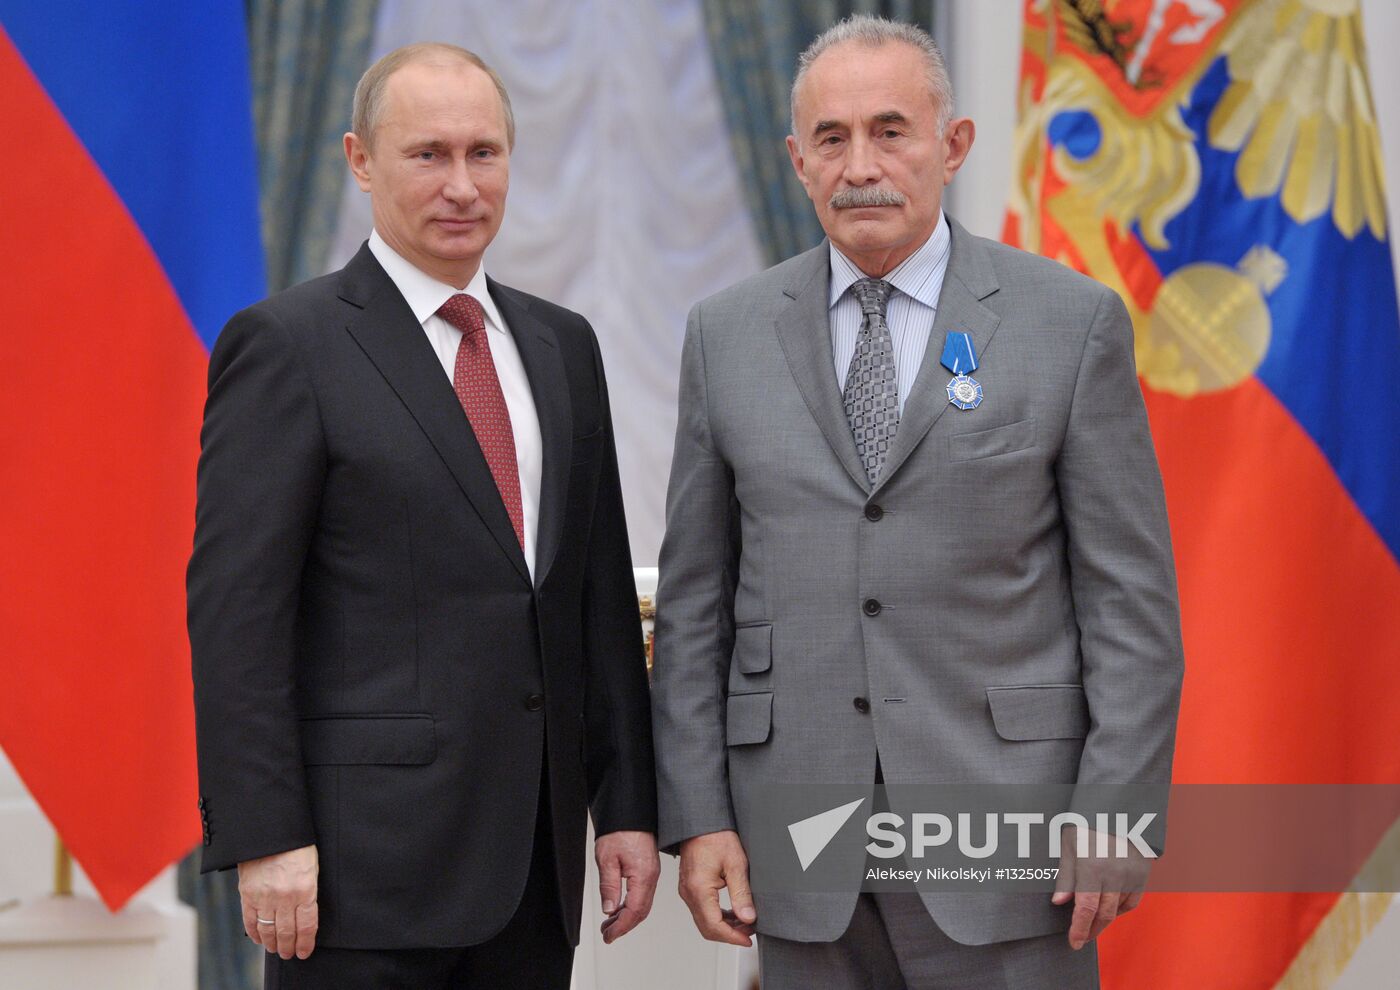 Vladimir Putin presents state awards at Moscow Kremlin